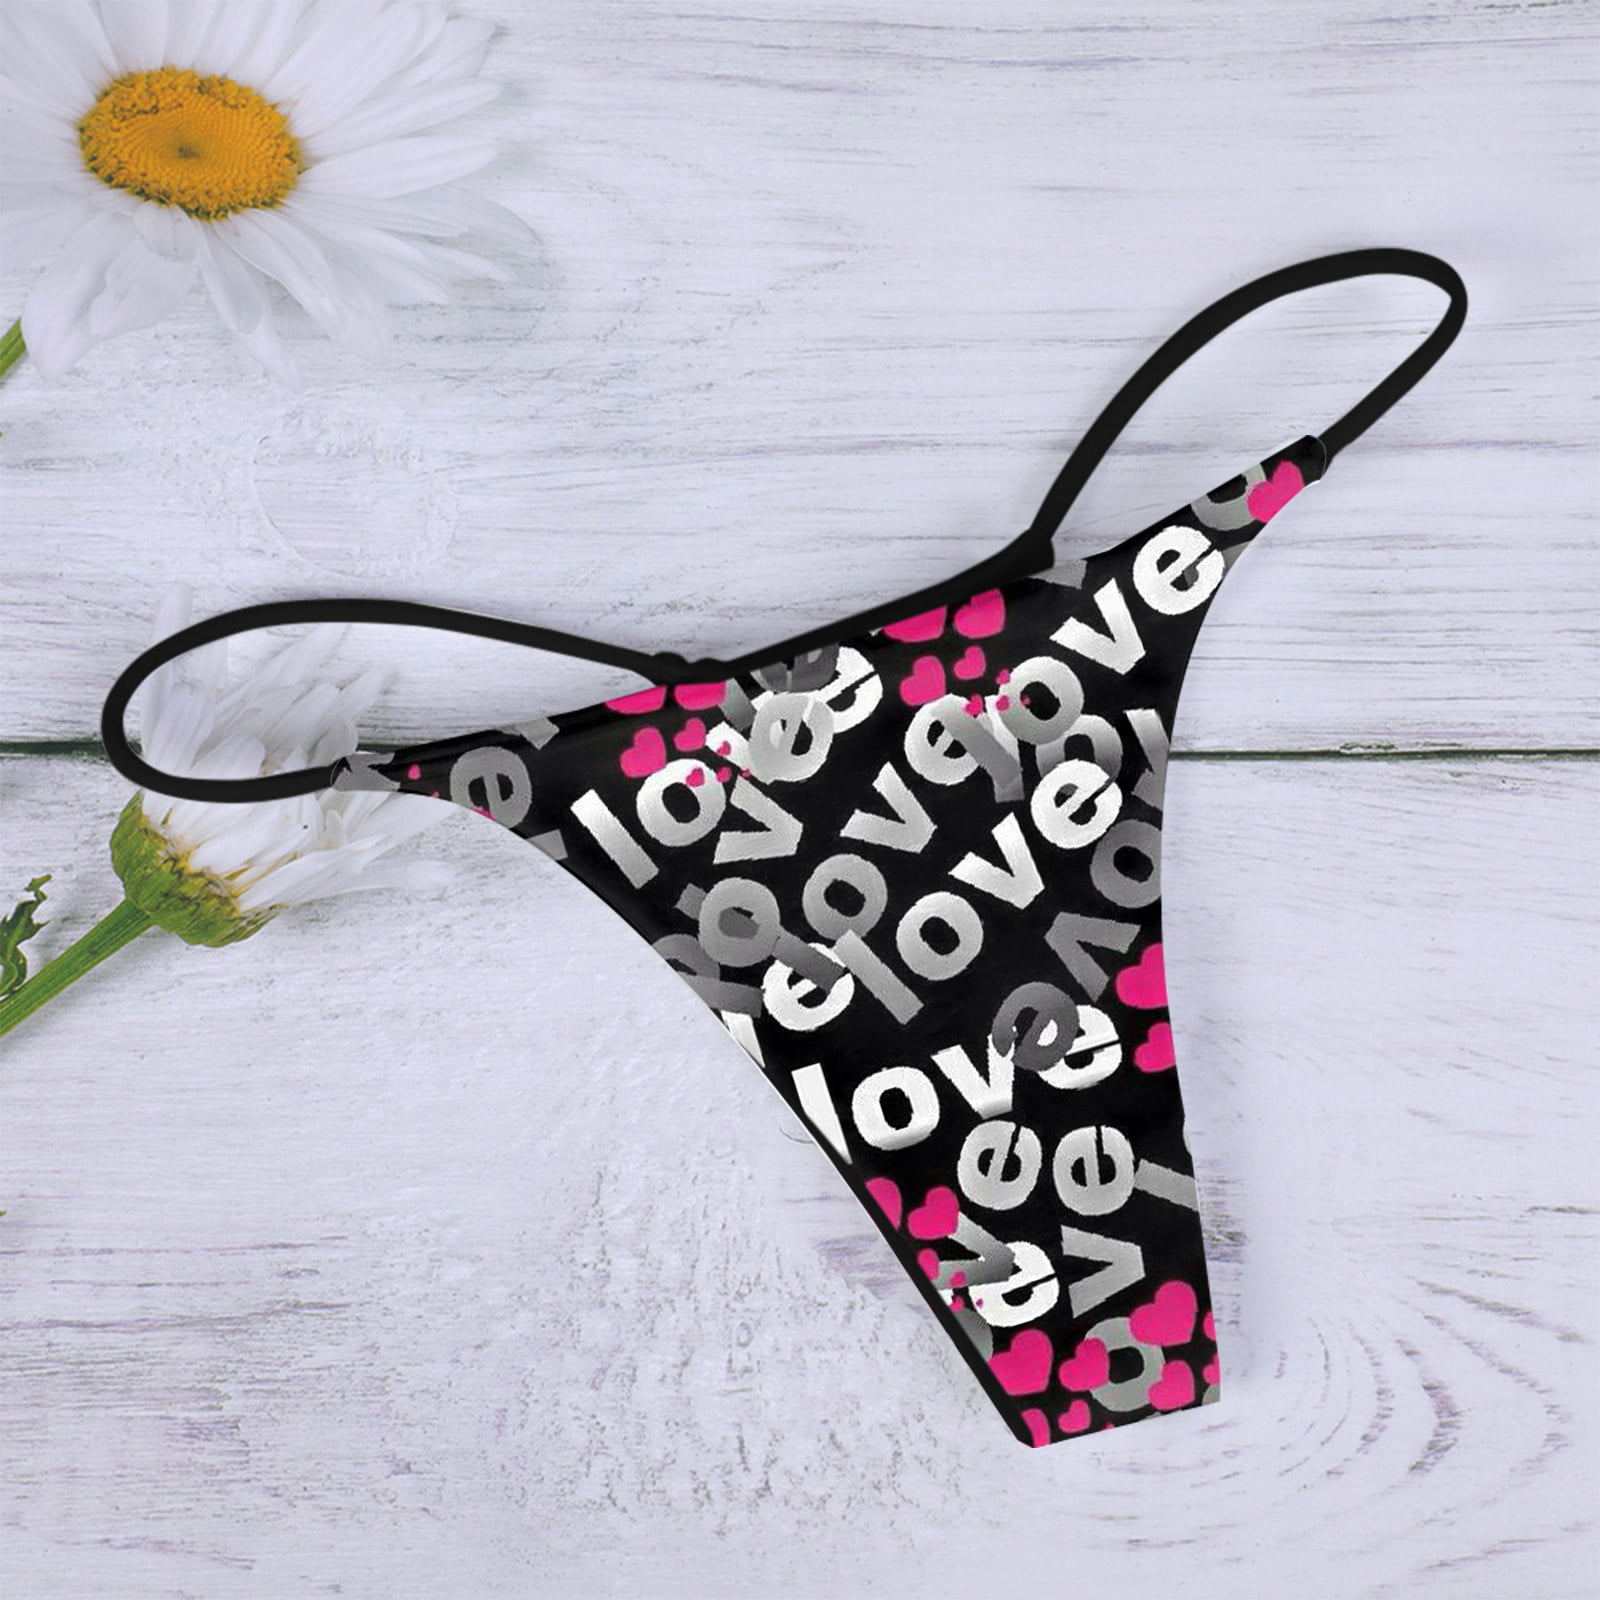 Aayomet Cotton Bikini Underwear for Women and Hip Lifting Seamless Pattern  Underwear (Pink, XL)